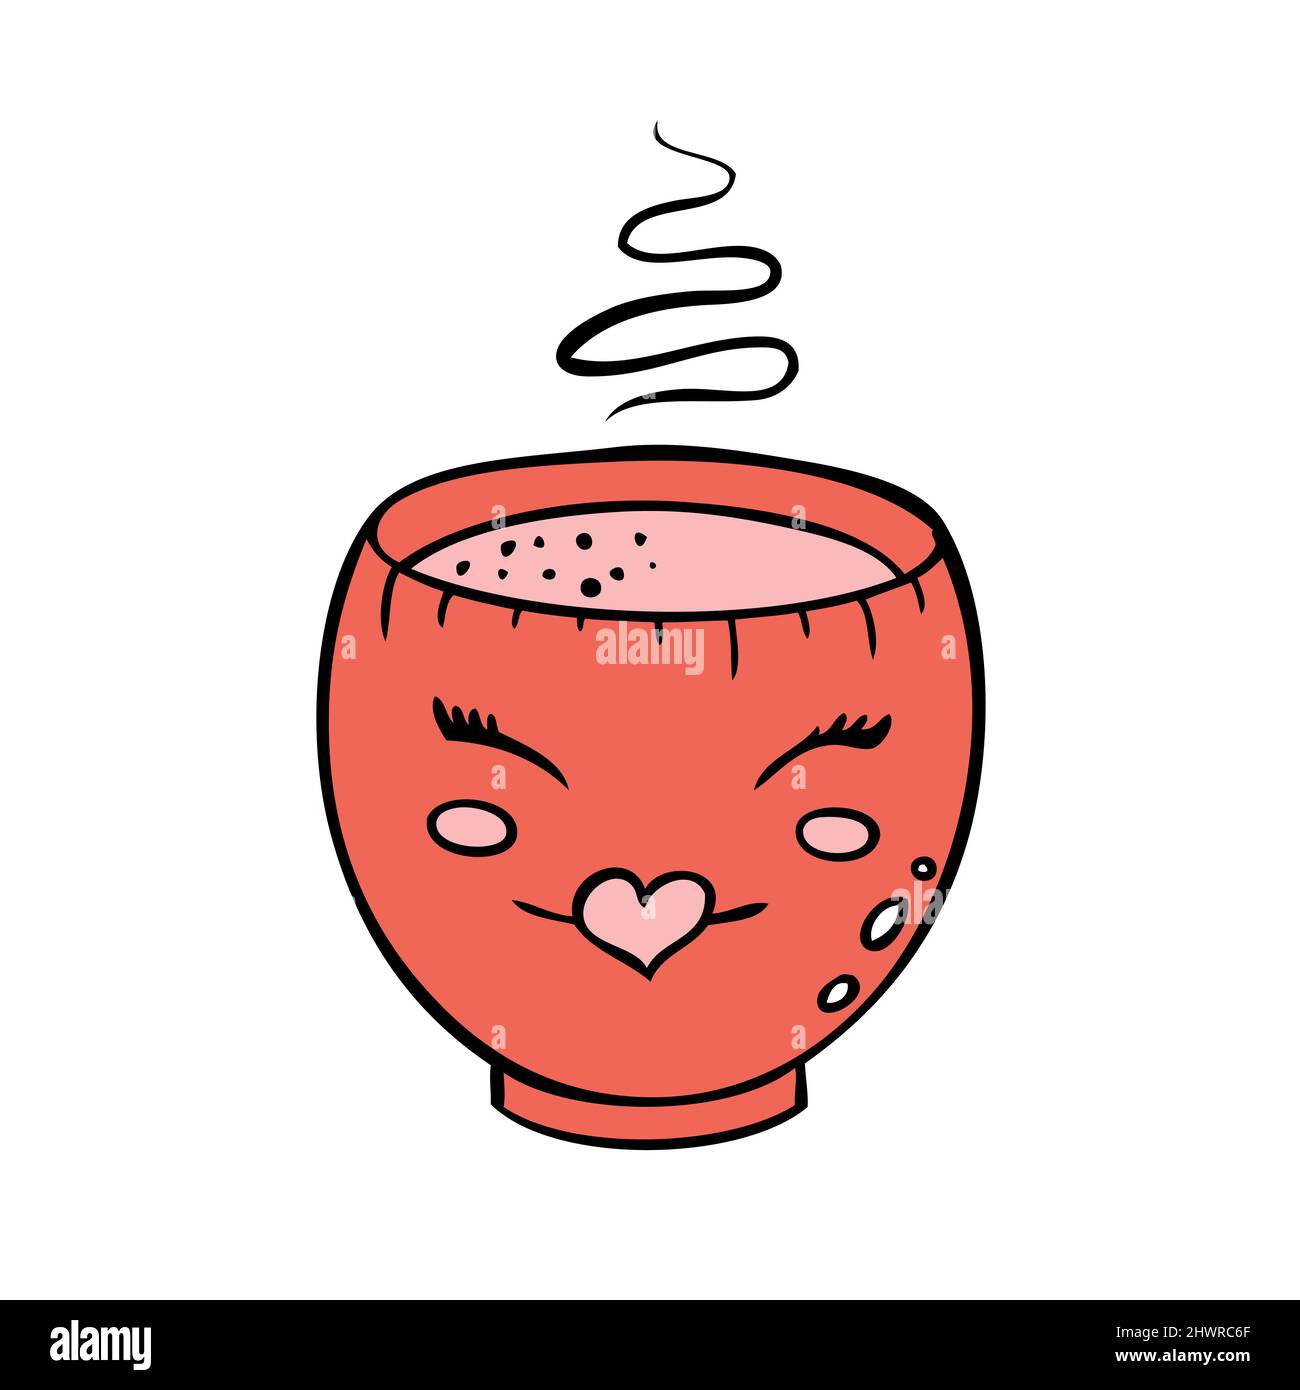 https://c8.alamy.com/comp/2HWRC6F/cute-cup-of-hot-drink-vector-illustration-in-doodle-style-2HWRC6F.jpg